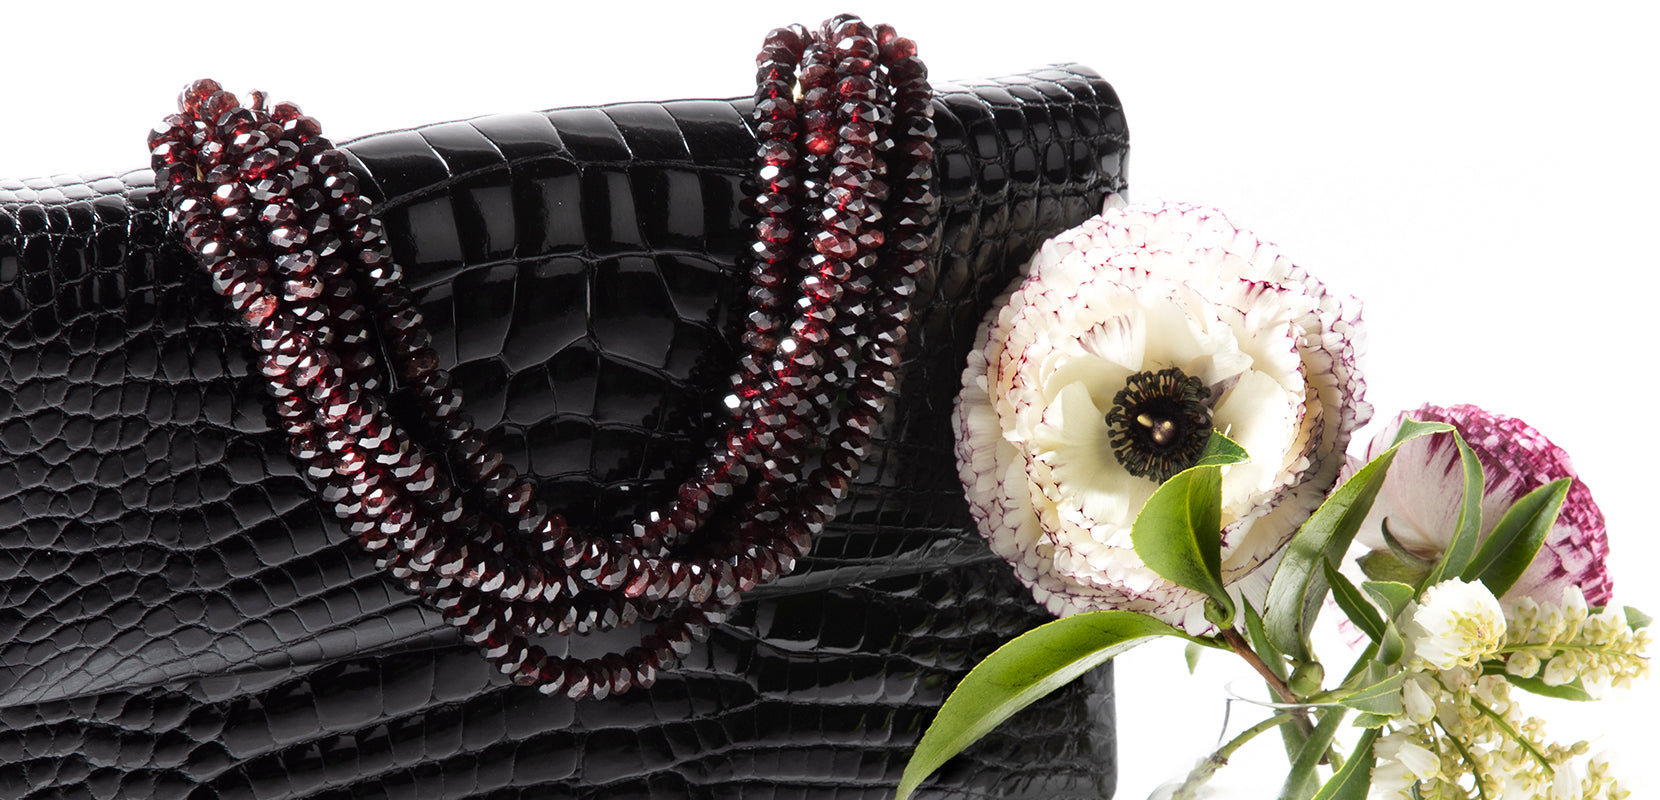 Darby Scott Croc Iconic handbag with Garnet jeweled handle